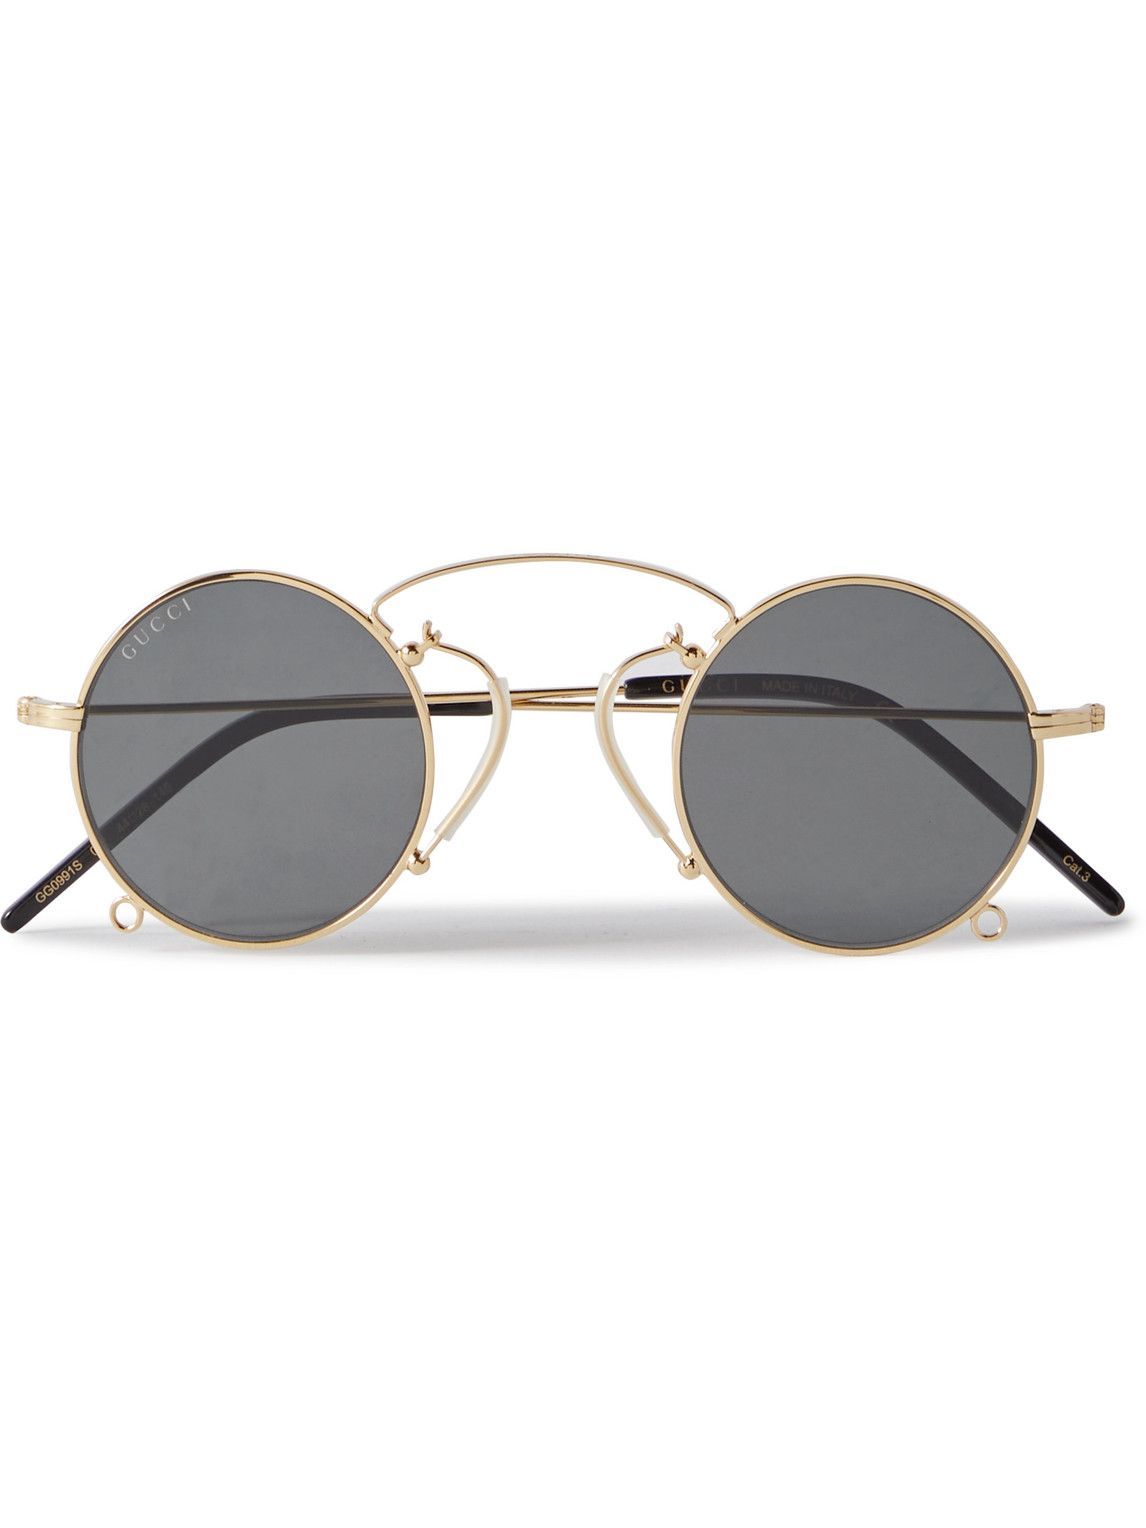 Souvenir Draai vast influenza Gucci Eyewear - Round-Frame Gold-Tone Sunglasses Gucci